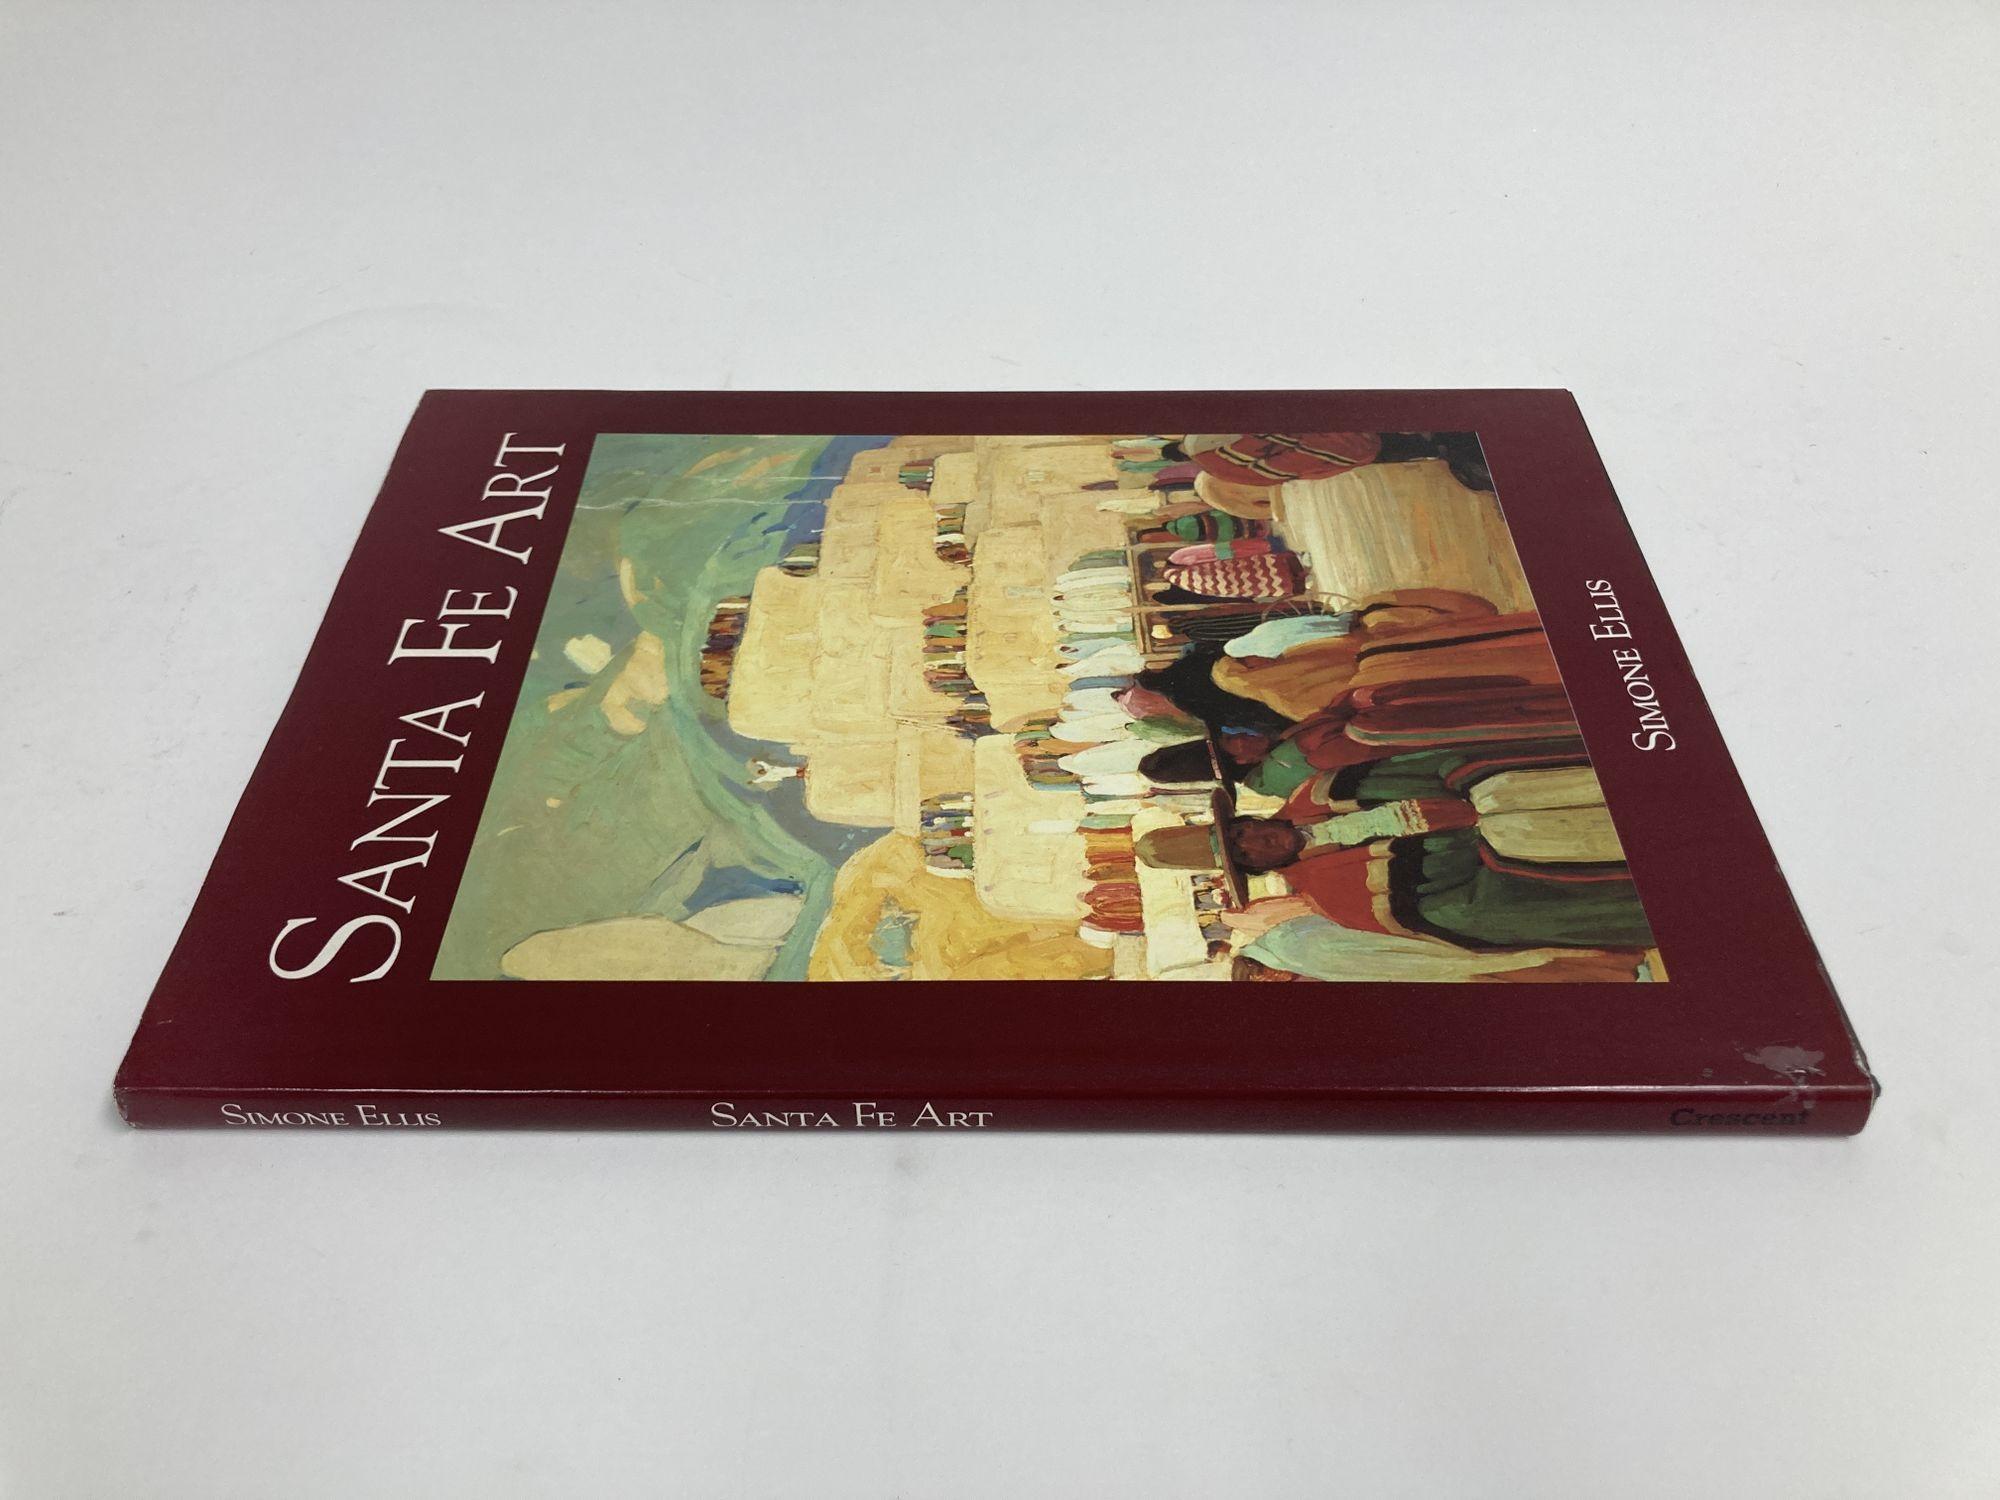 Folk Art Santa Fe Art. Ellis, Simone, Published by Crescent Books., New York., 1993 Large For Sale